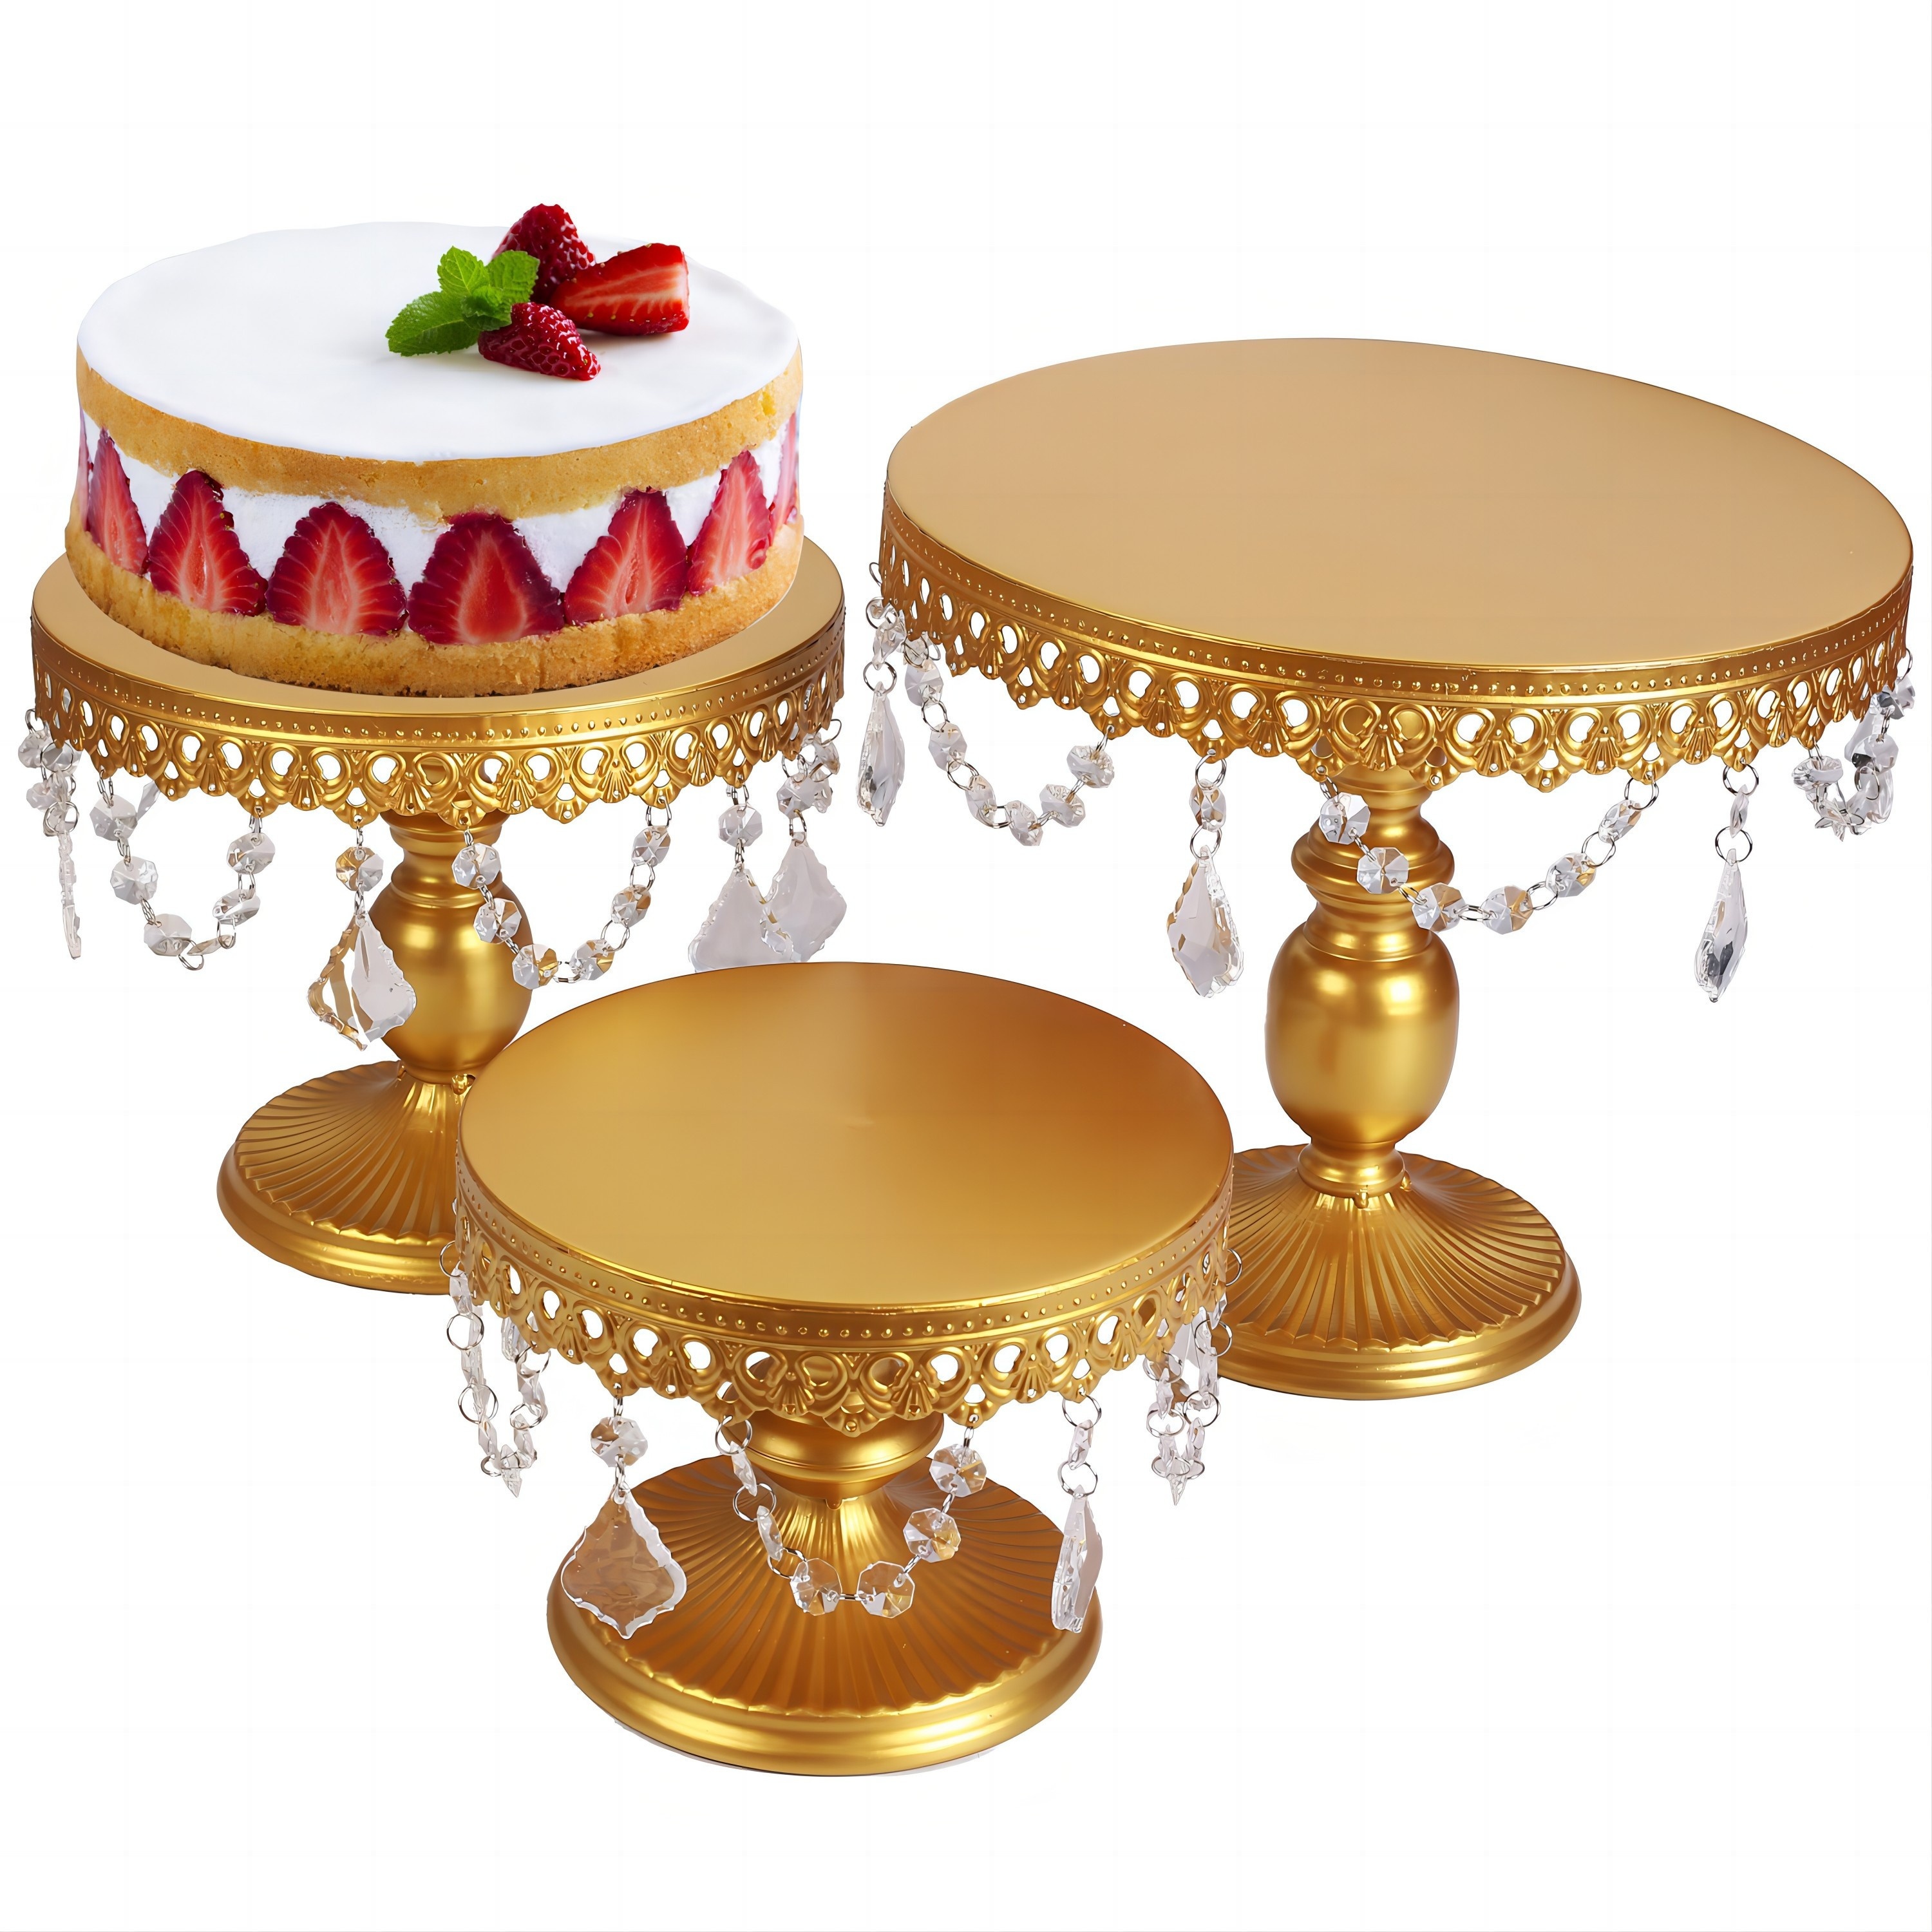 10 soportes dorados para tartas para mesa de postres, juego de soporte de  metal de cristal para tartas, soporte para cupcakes, postres, pastelería